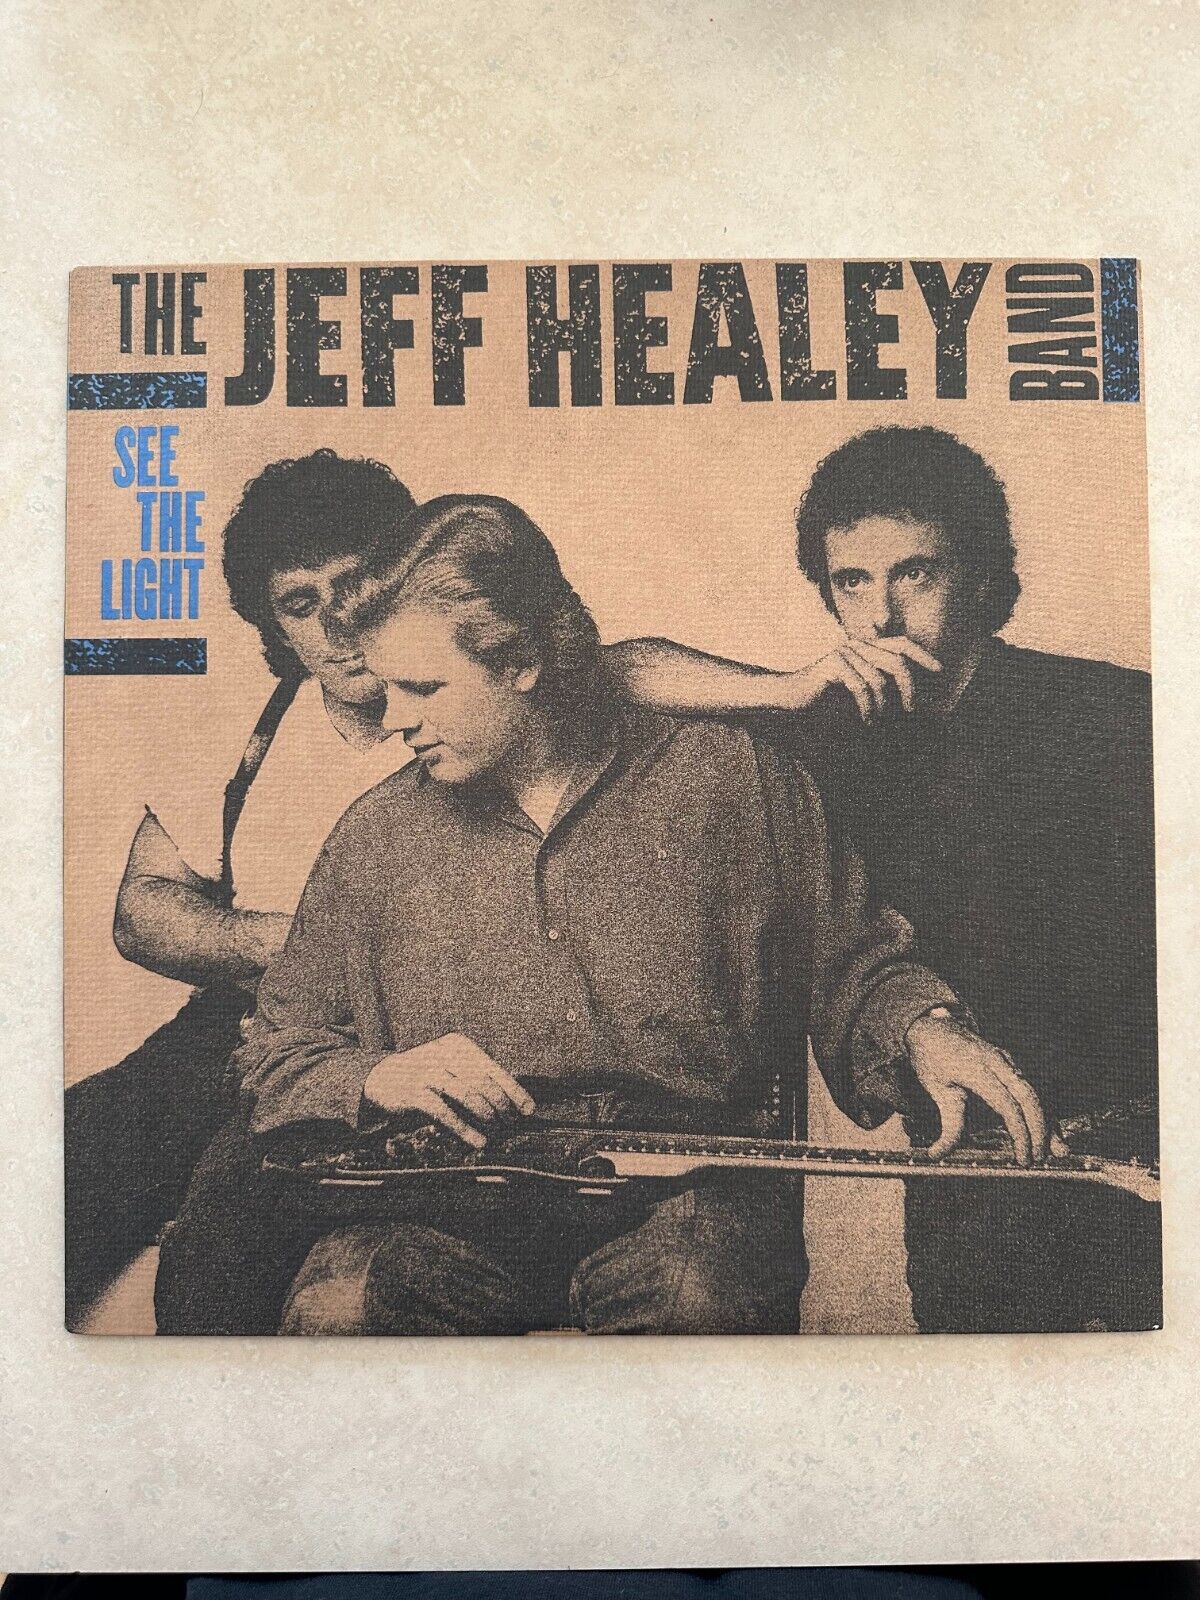 The Jeff Healey Band - See The Light - EX Arista USA 1988 vinyl LP - ANGEL EYES